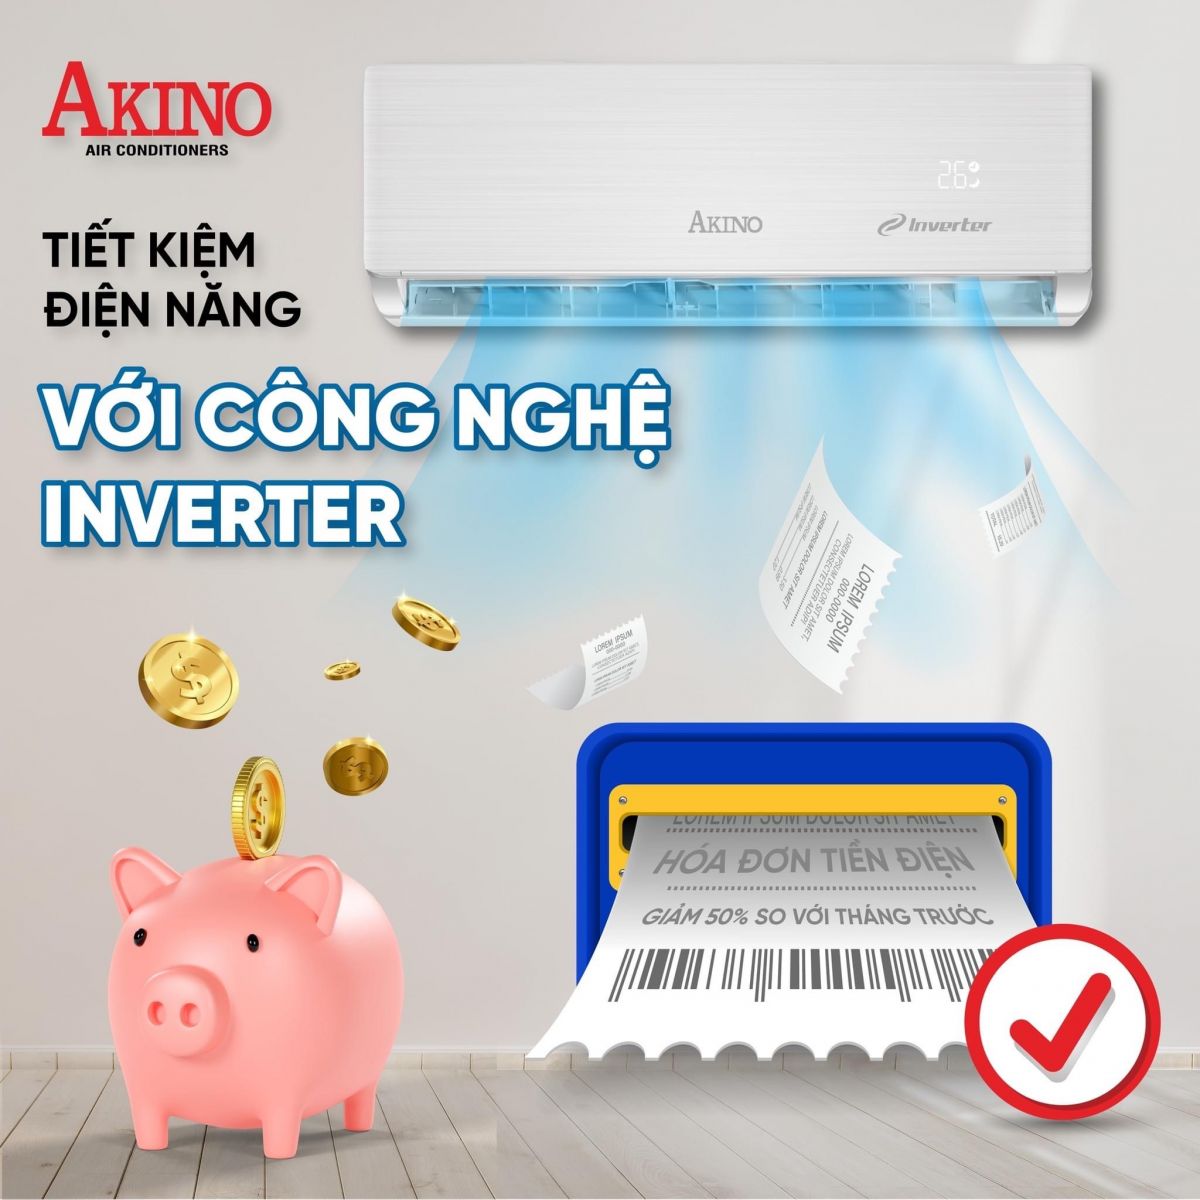 Máy lạnh AKINO Inverter 1.0HP TH-T1C09INVFA